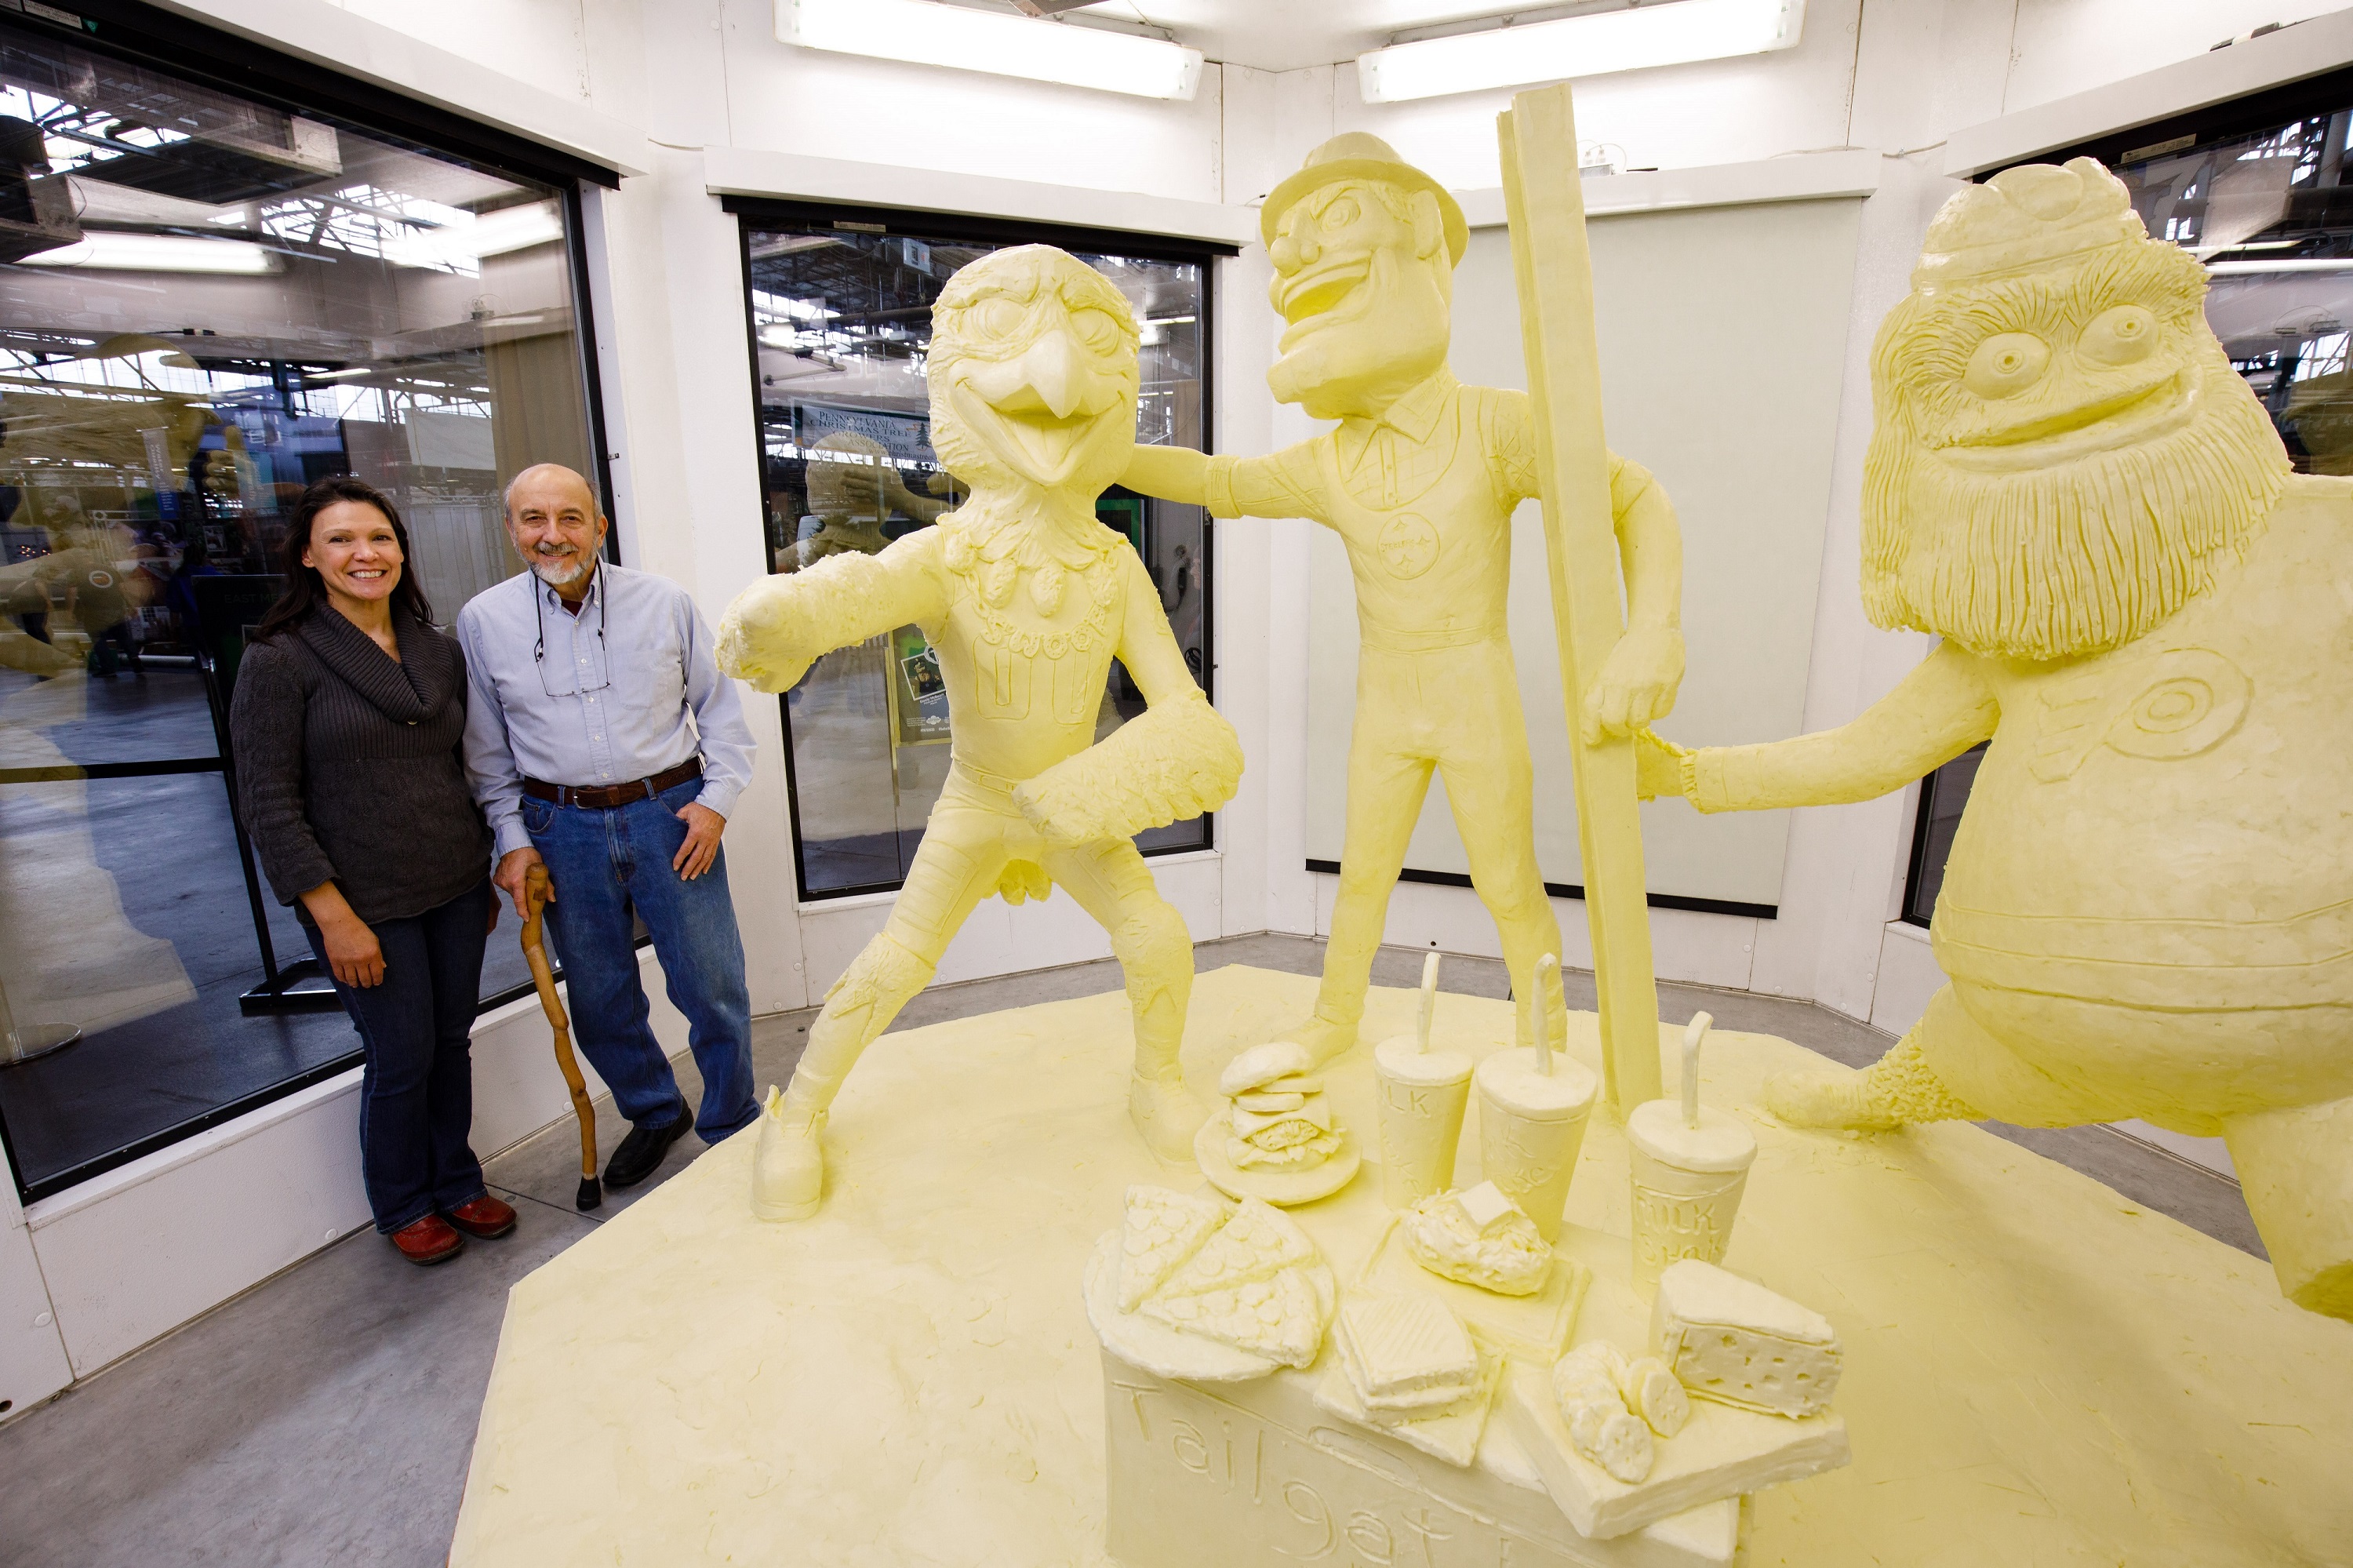 Conshohocken sculptors find worldwide fame turning 1,000 pounds of